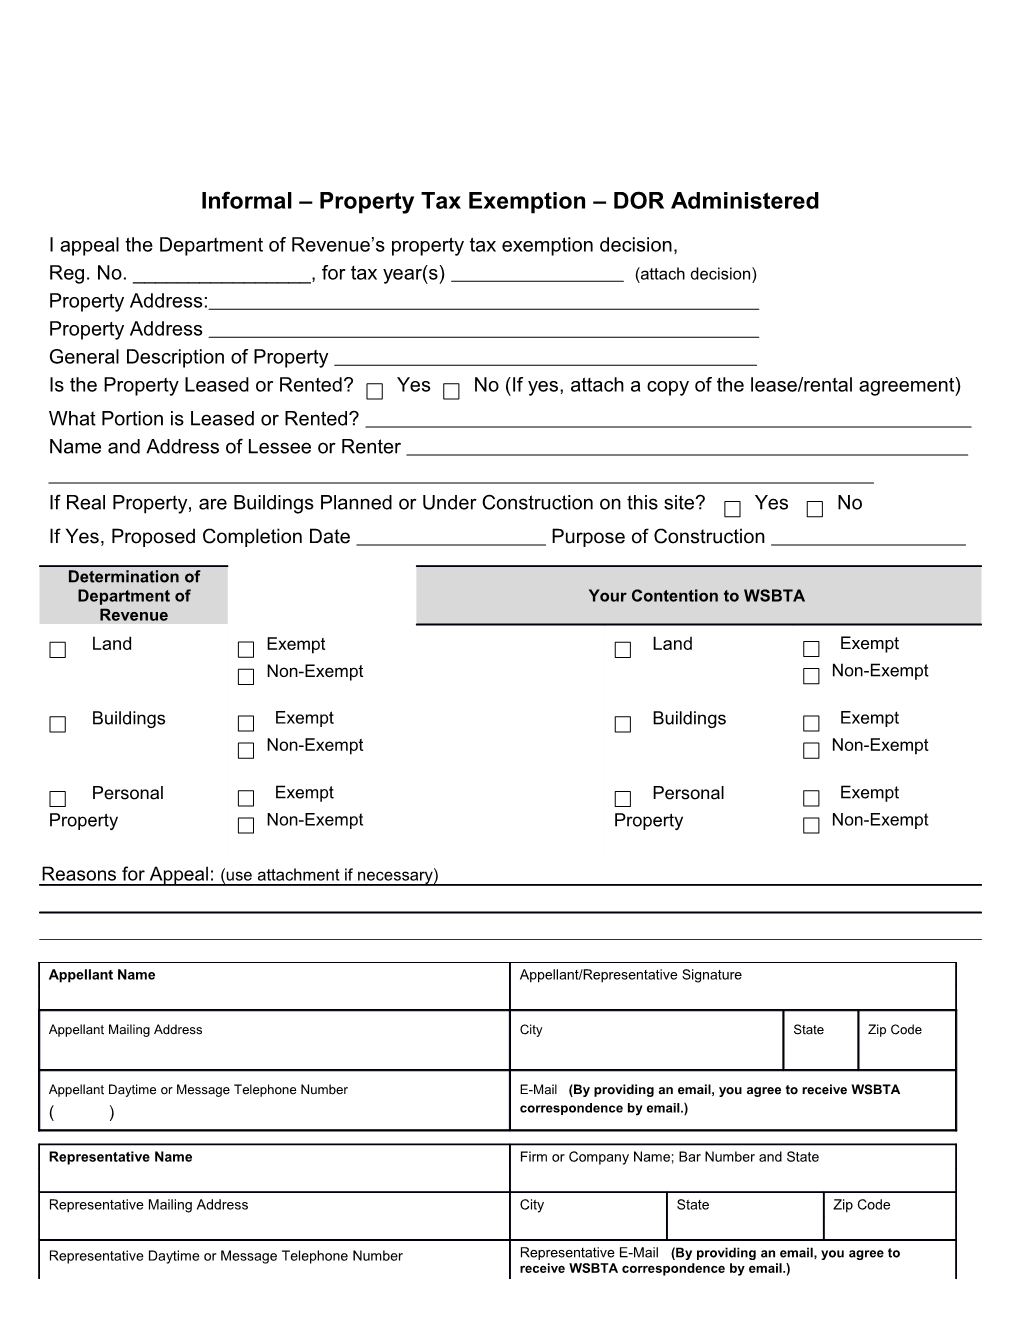 Informal Property Tax Exemption DOR Administered